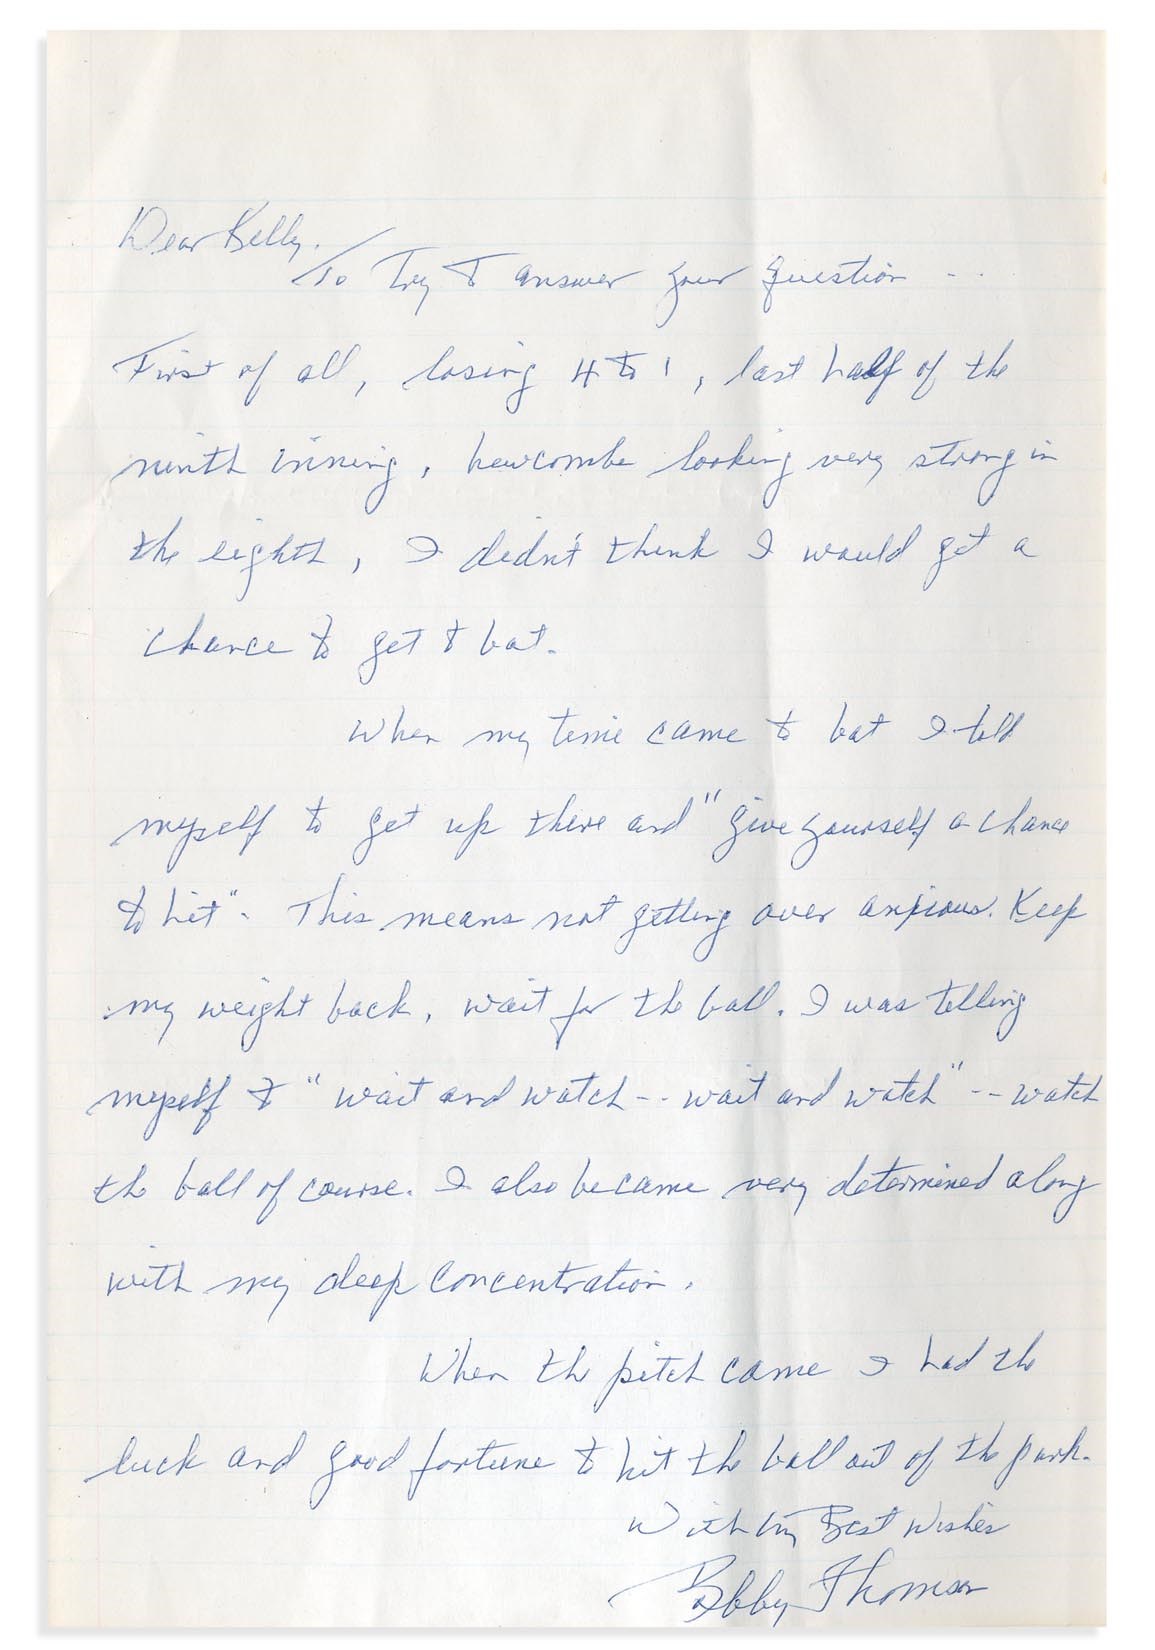 - Bobby Thomson Handwritten Letter Detailing "Shot Heard 'Round the World"